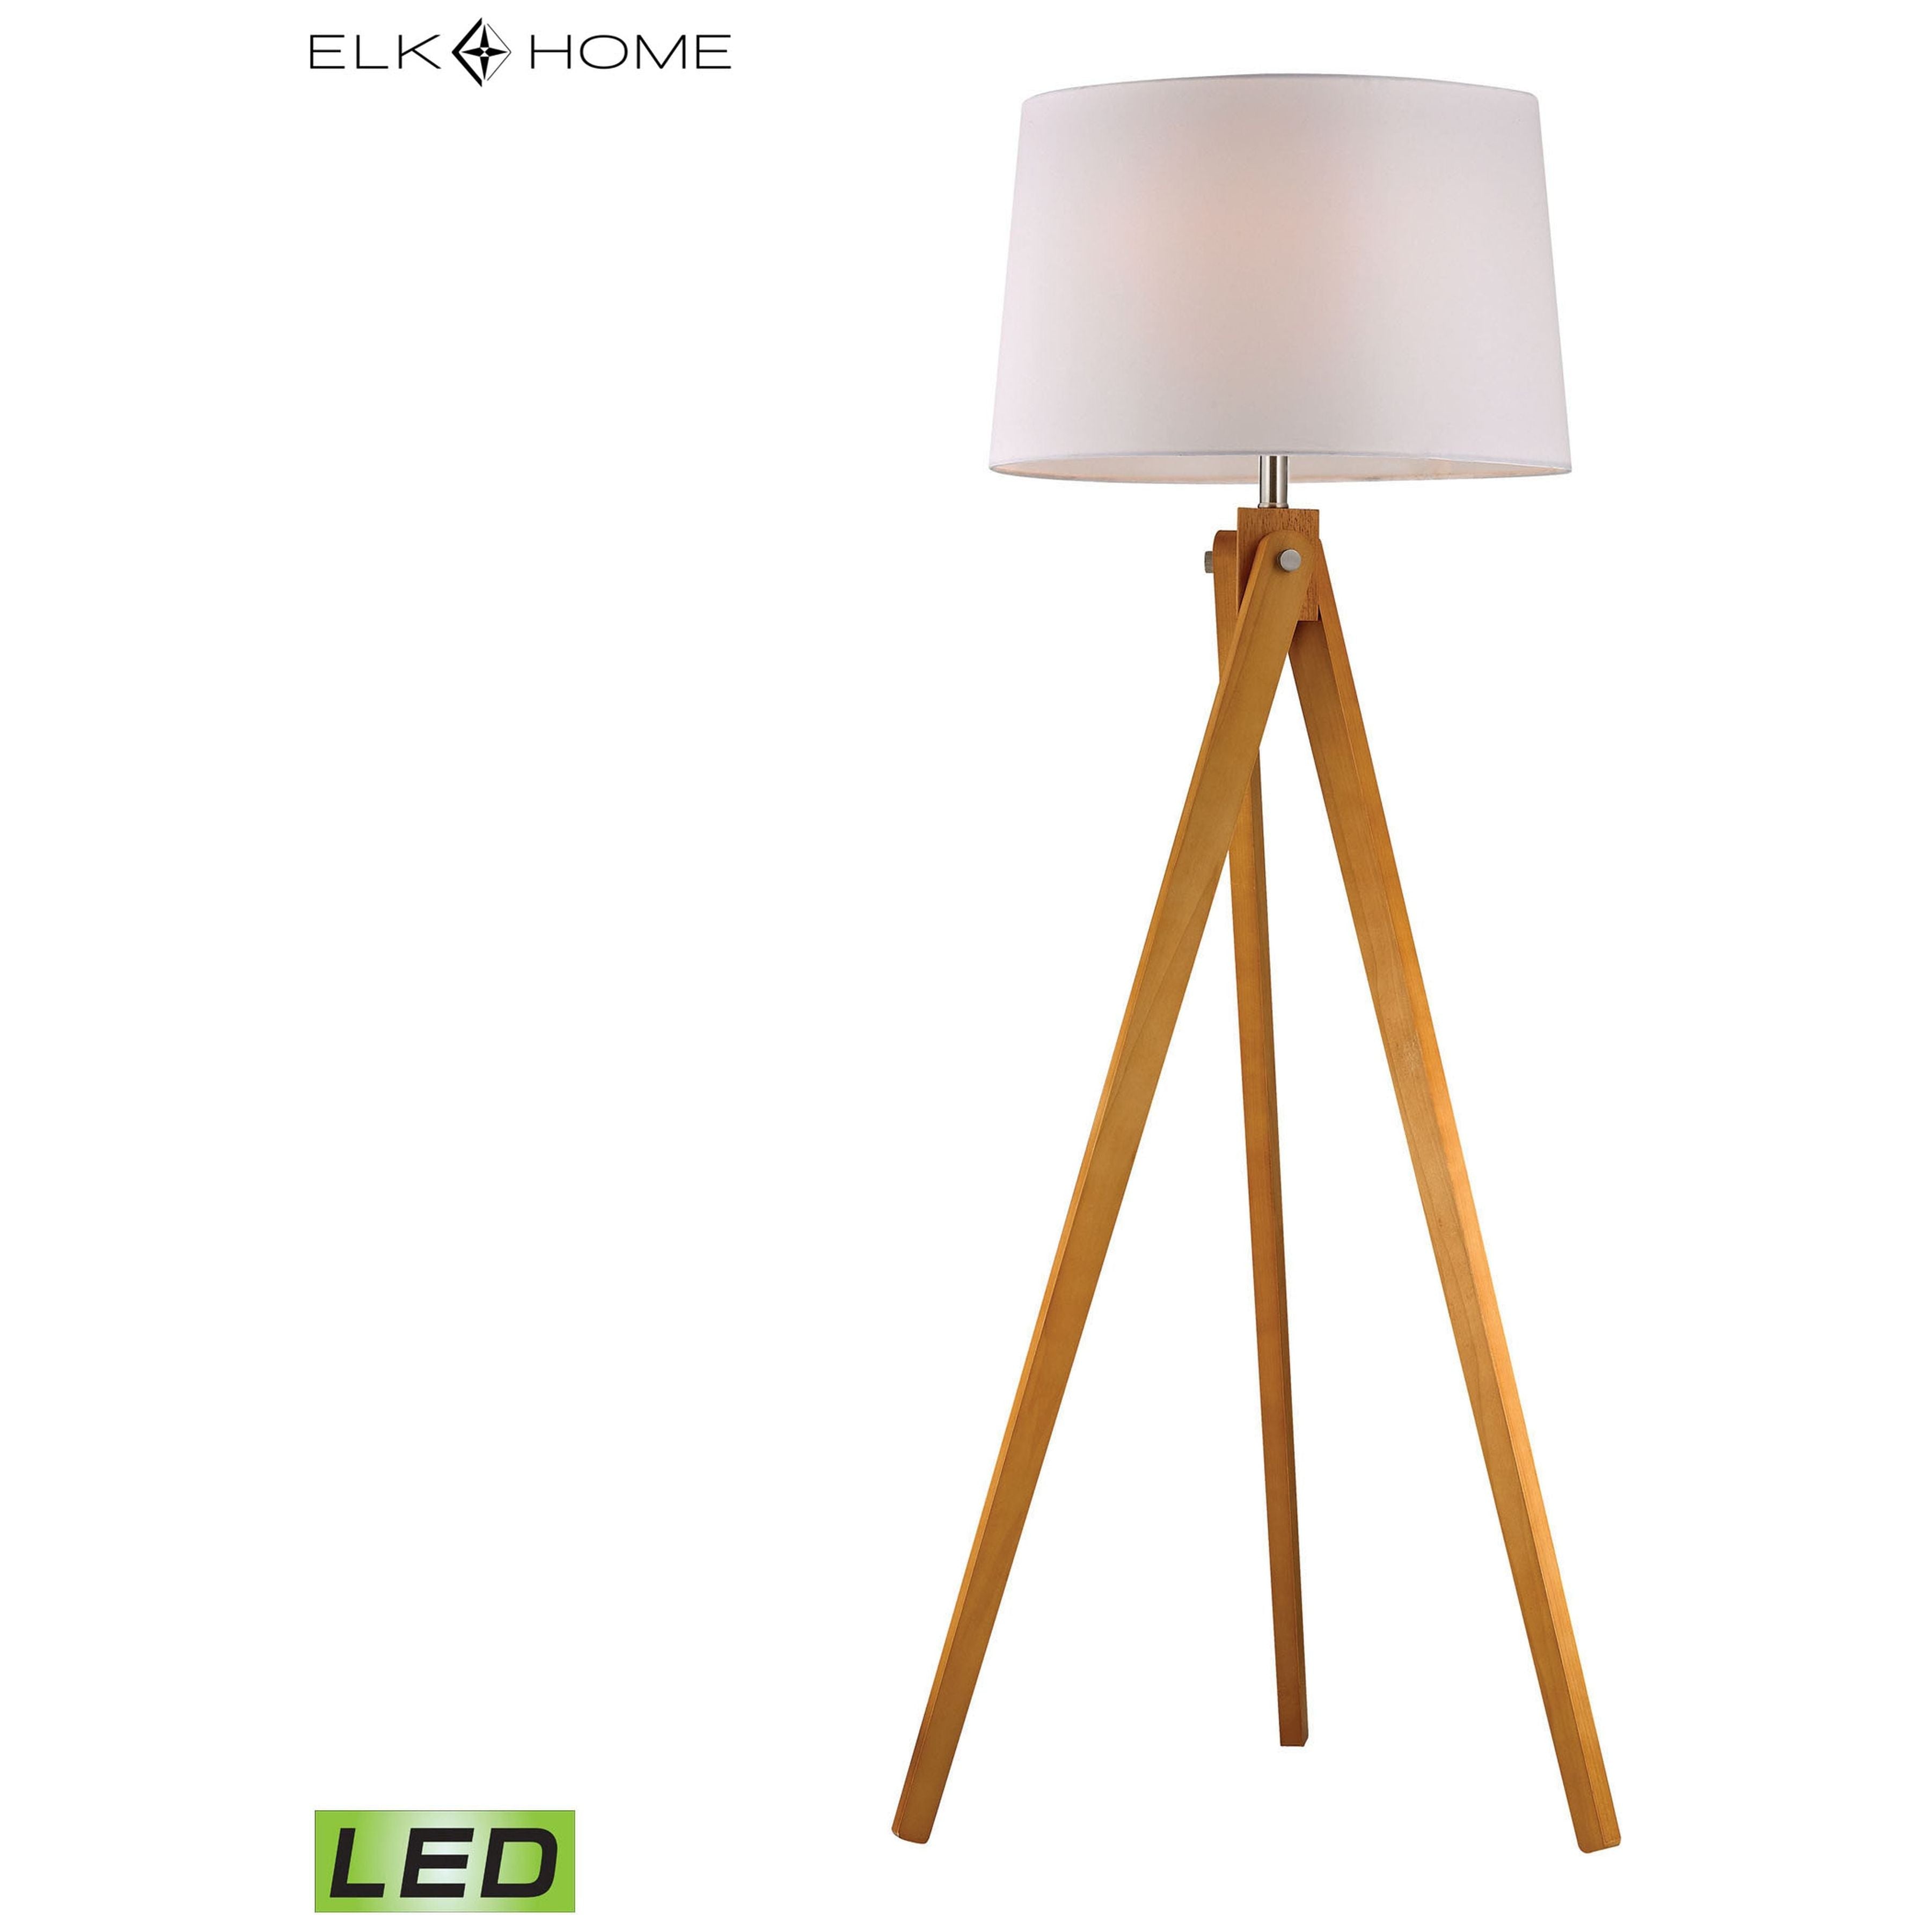 Wooden Tripod 63" High 1-Light Floor Lamp